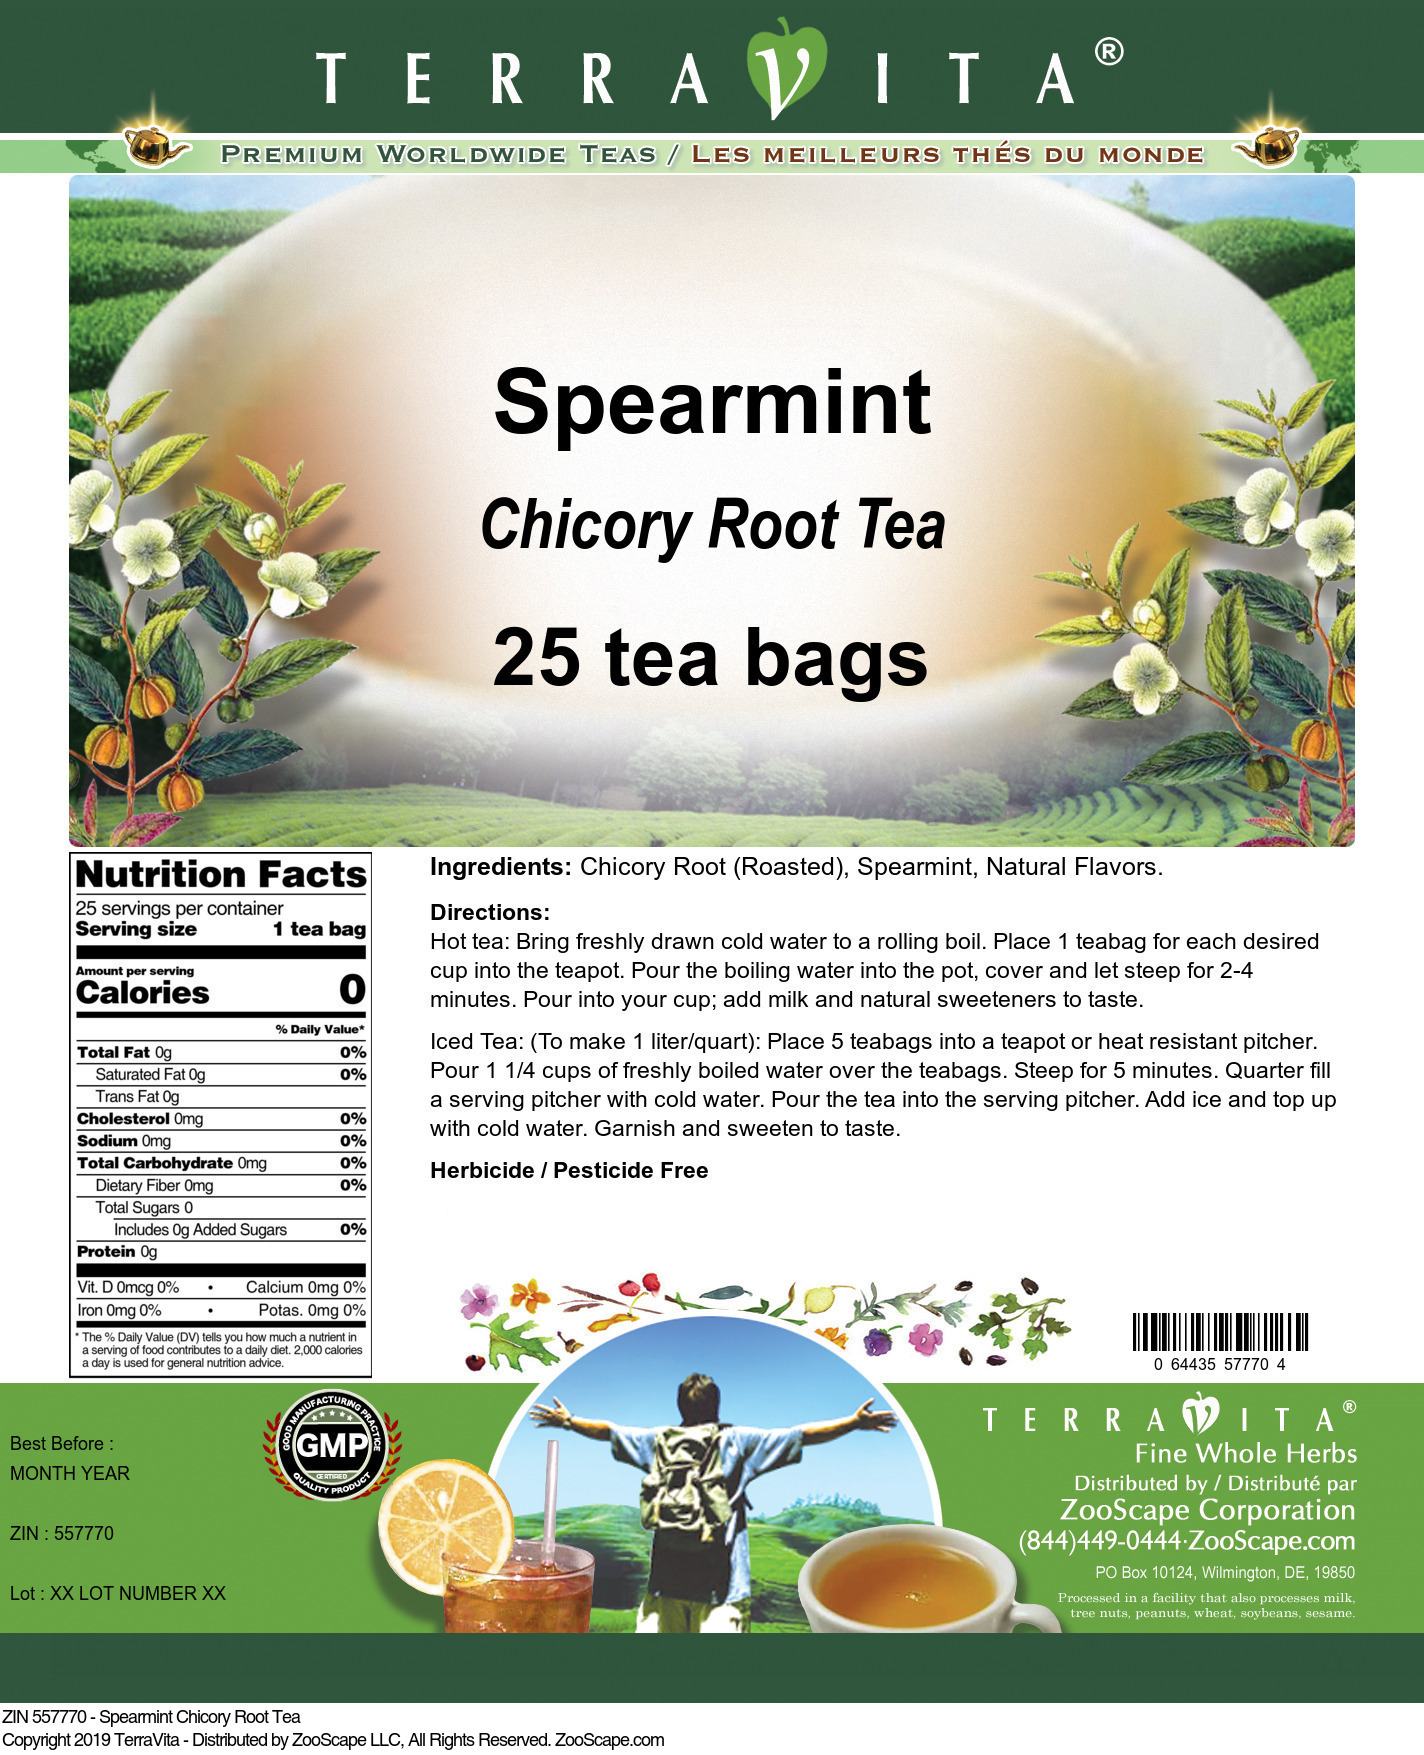 Spearmint Chicory Root Tea - Label